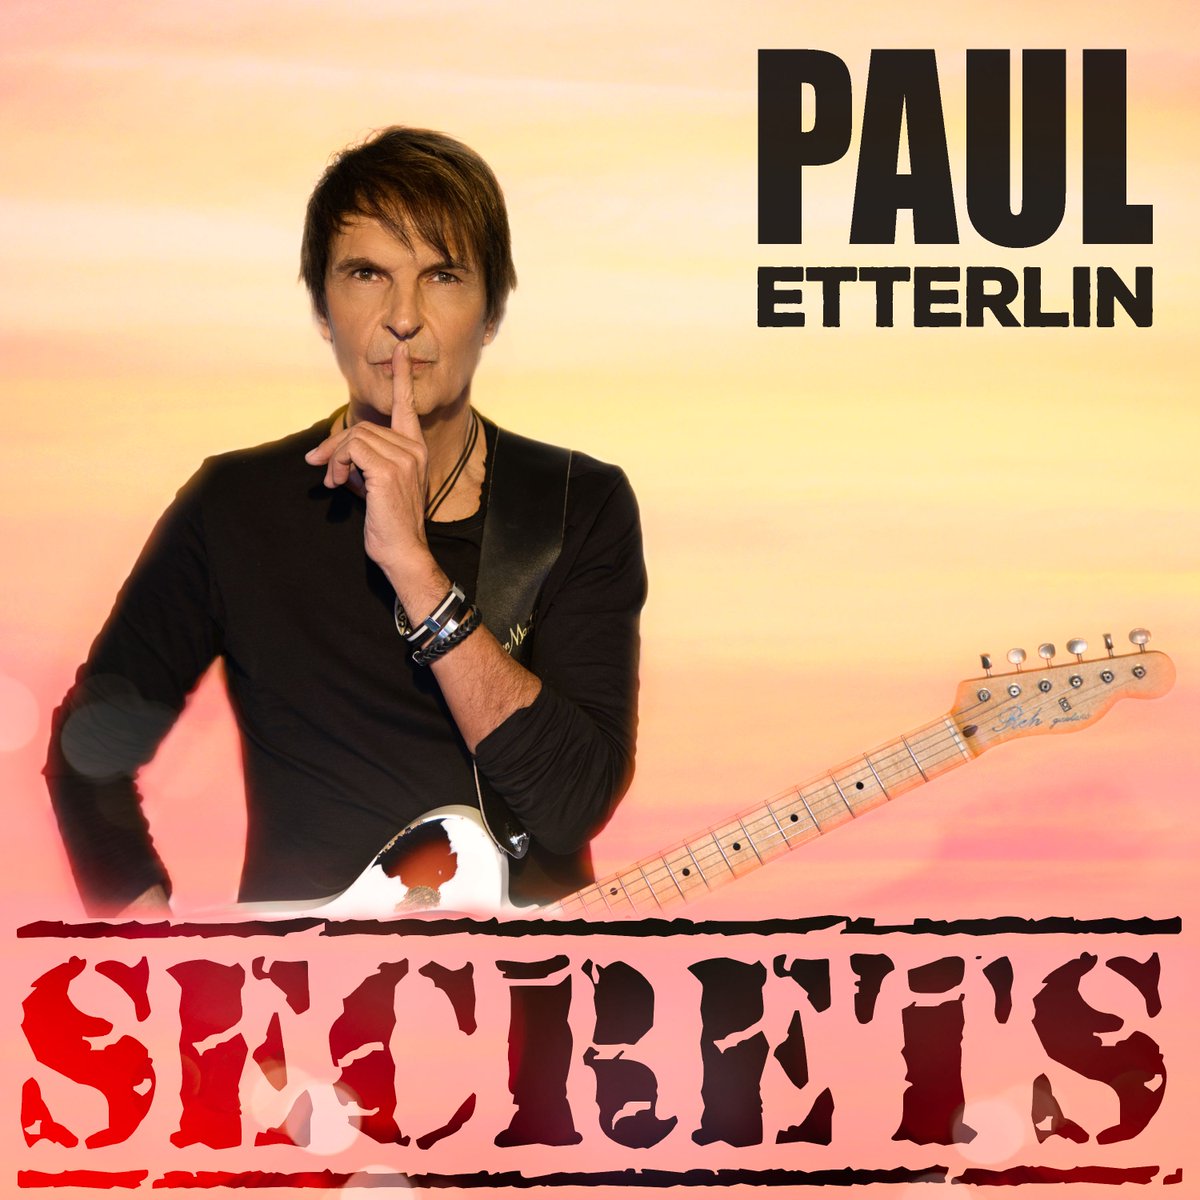 ▂▂▂▂▂▂▂▂▂▂▂▂▂▂
#TheWelcomeShow #222 PREMIERE

🔊 Paul Etterlin - Secrets

Brand new single released MAY 3. 2022

🌐 pauletterlin.com
📸 instagram.com/pauletterlin/

on #🆁🅺🅲 📻 radiokc.fm
▂▂▂▂▂▂▂▂▂▂▂▂▂▂